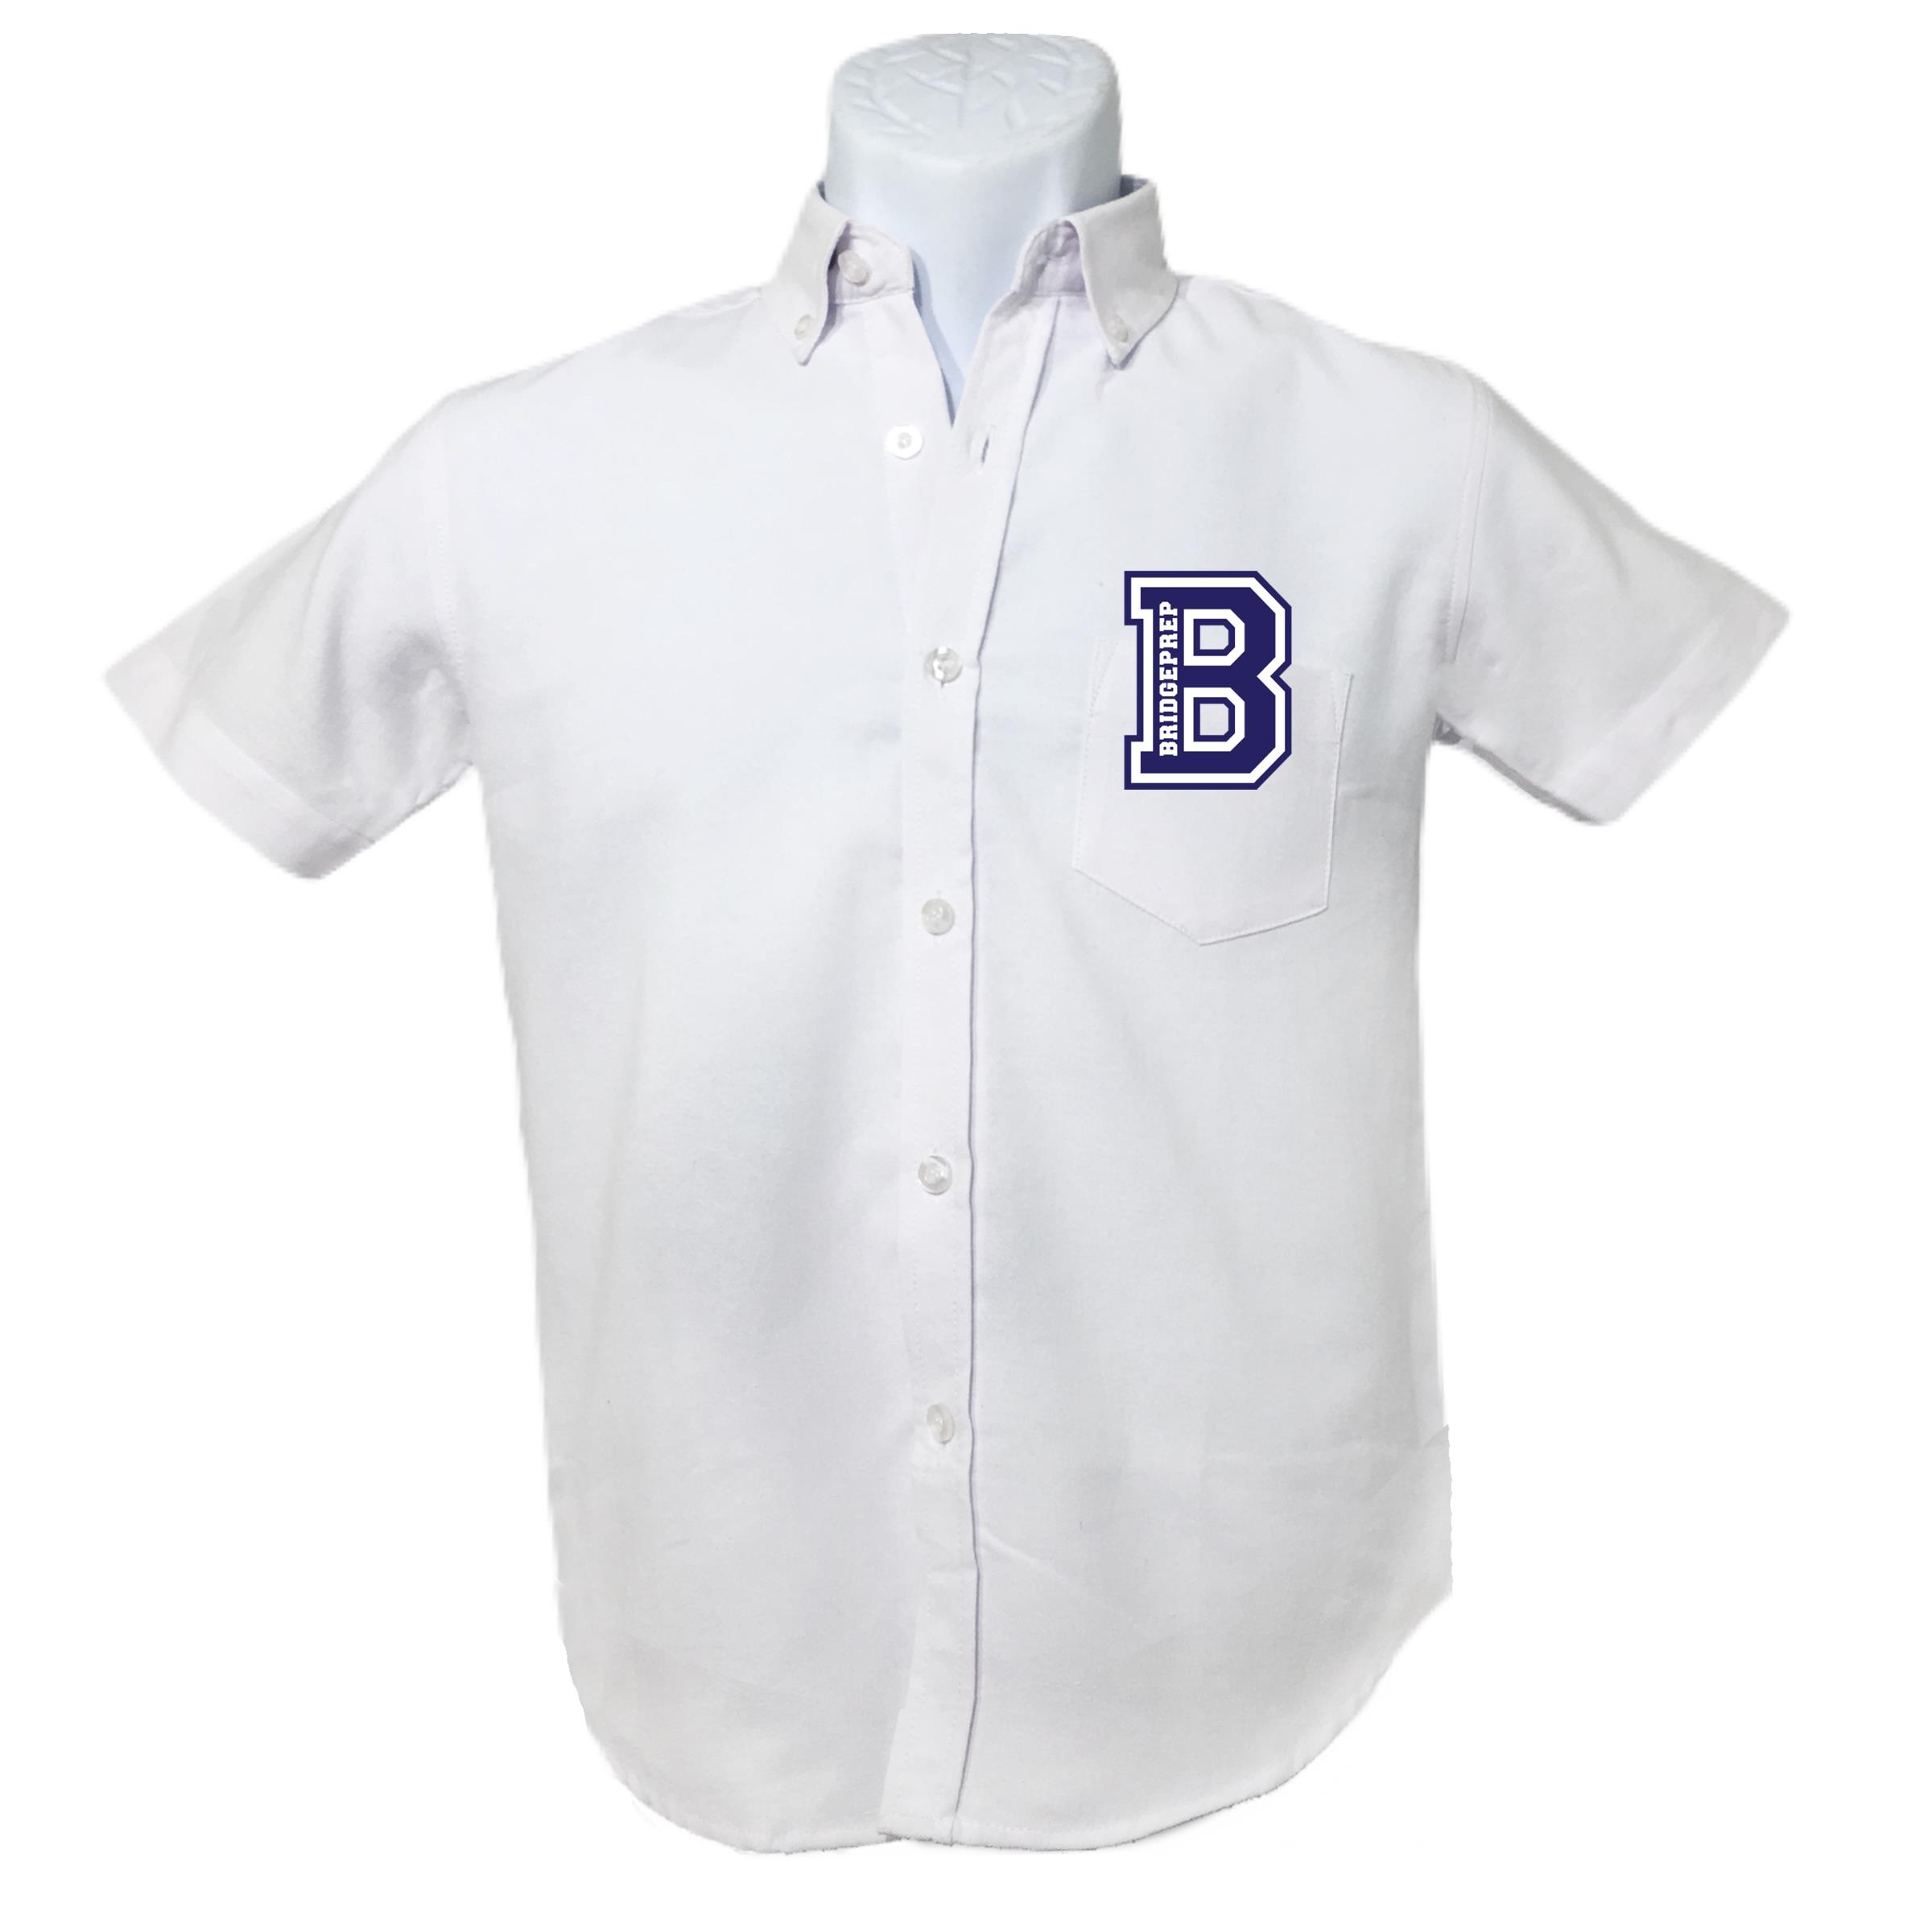 Ibiley Uniforms More - 1 Online Retailer For Boys Girls School Uniforms In The United States - Bridgeprep Academy Riverview - Dresscode